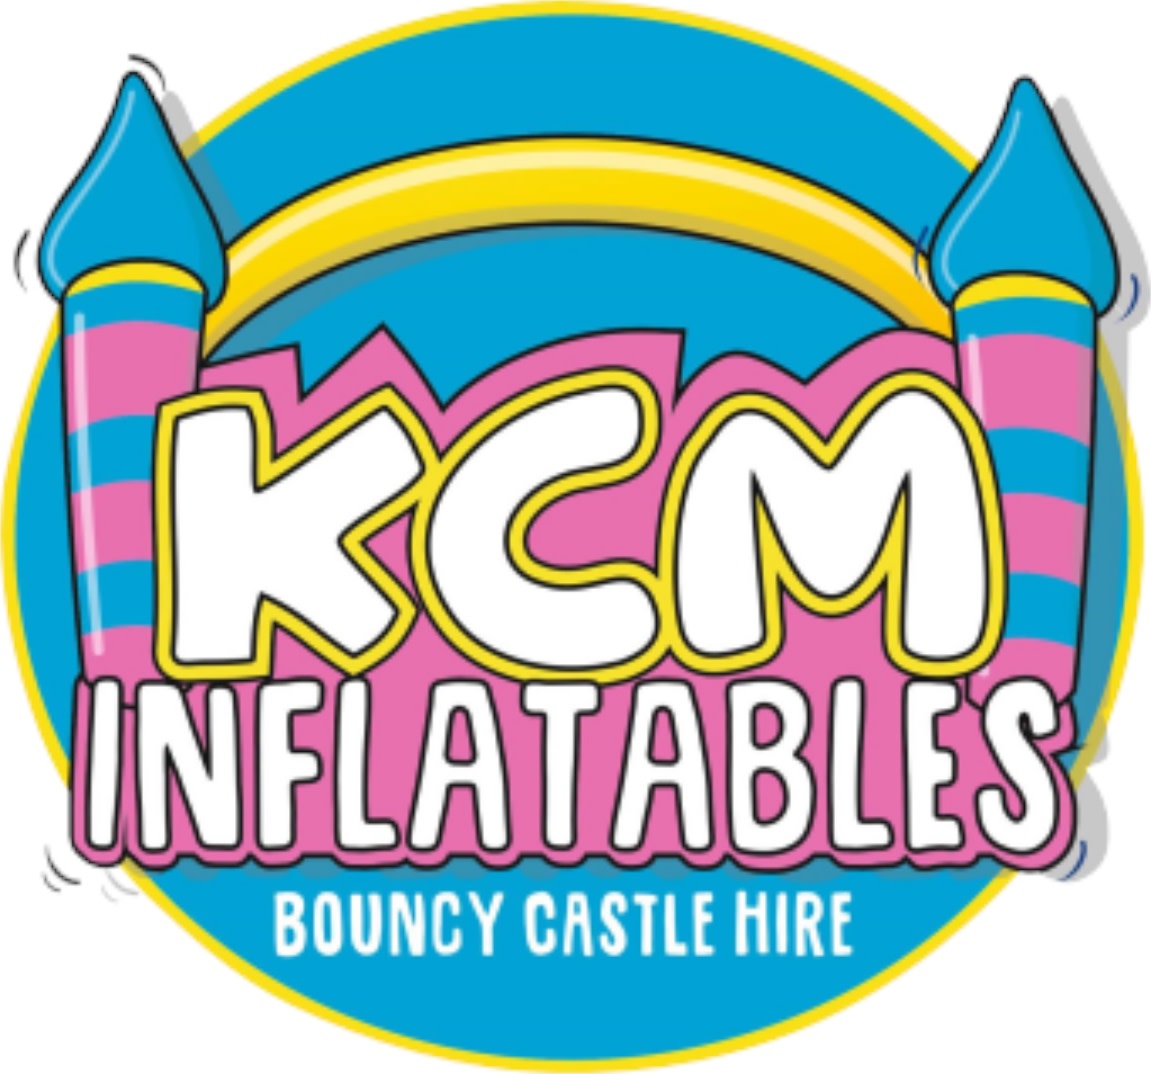 (c) Kcm-inflatables.co.uk